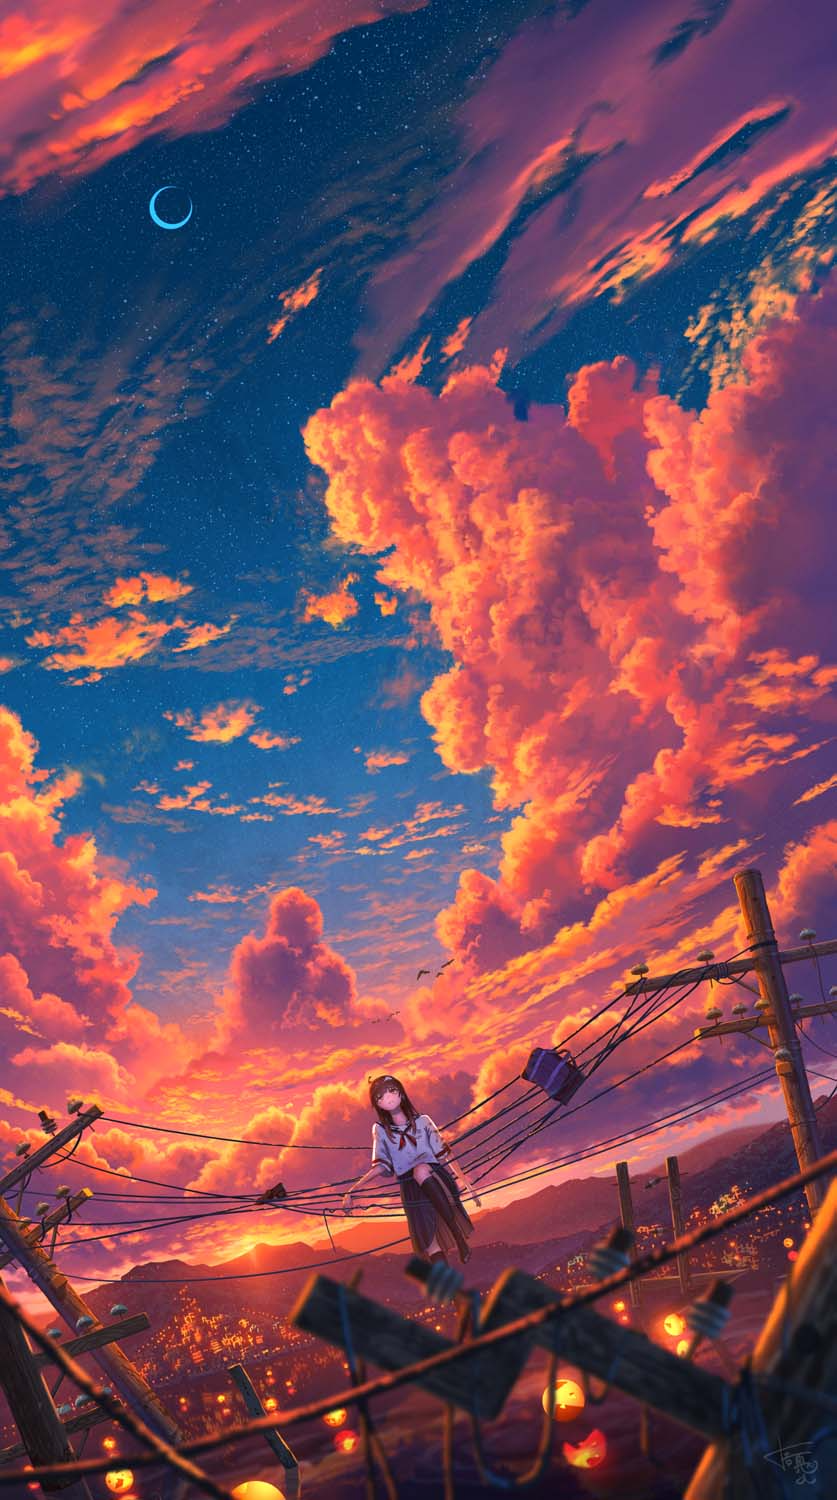 Download wallpaper 1600x900 sunset pathway anime girl original 169  widescreen 1600x900 hd background 7311